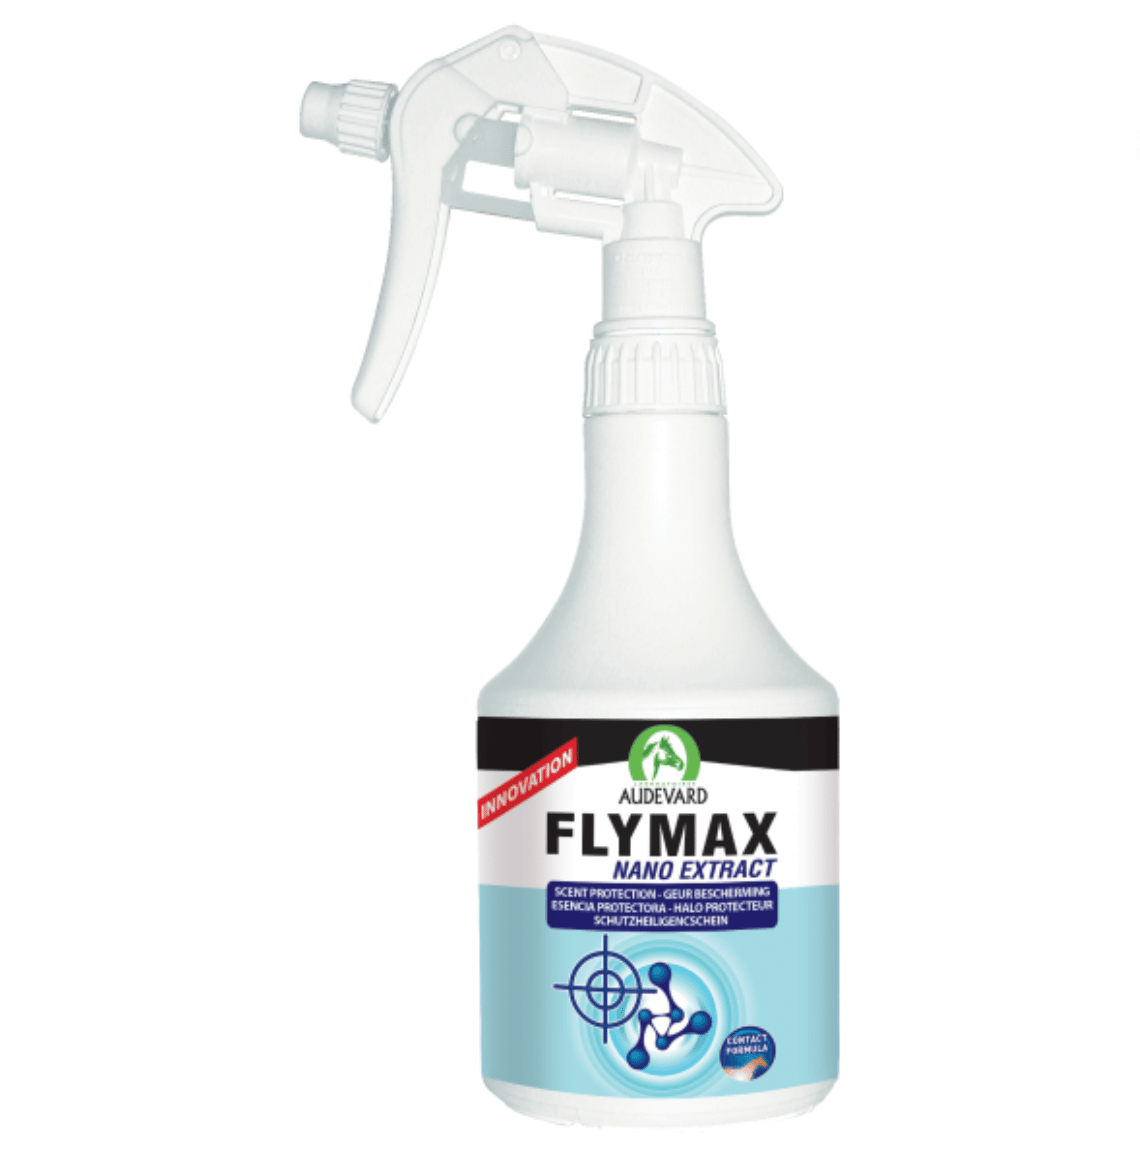 Audevard Flymax Nano Extract-1